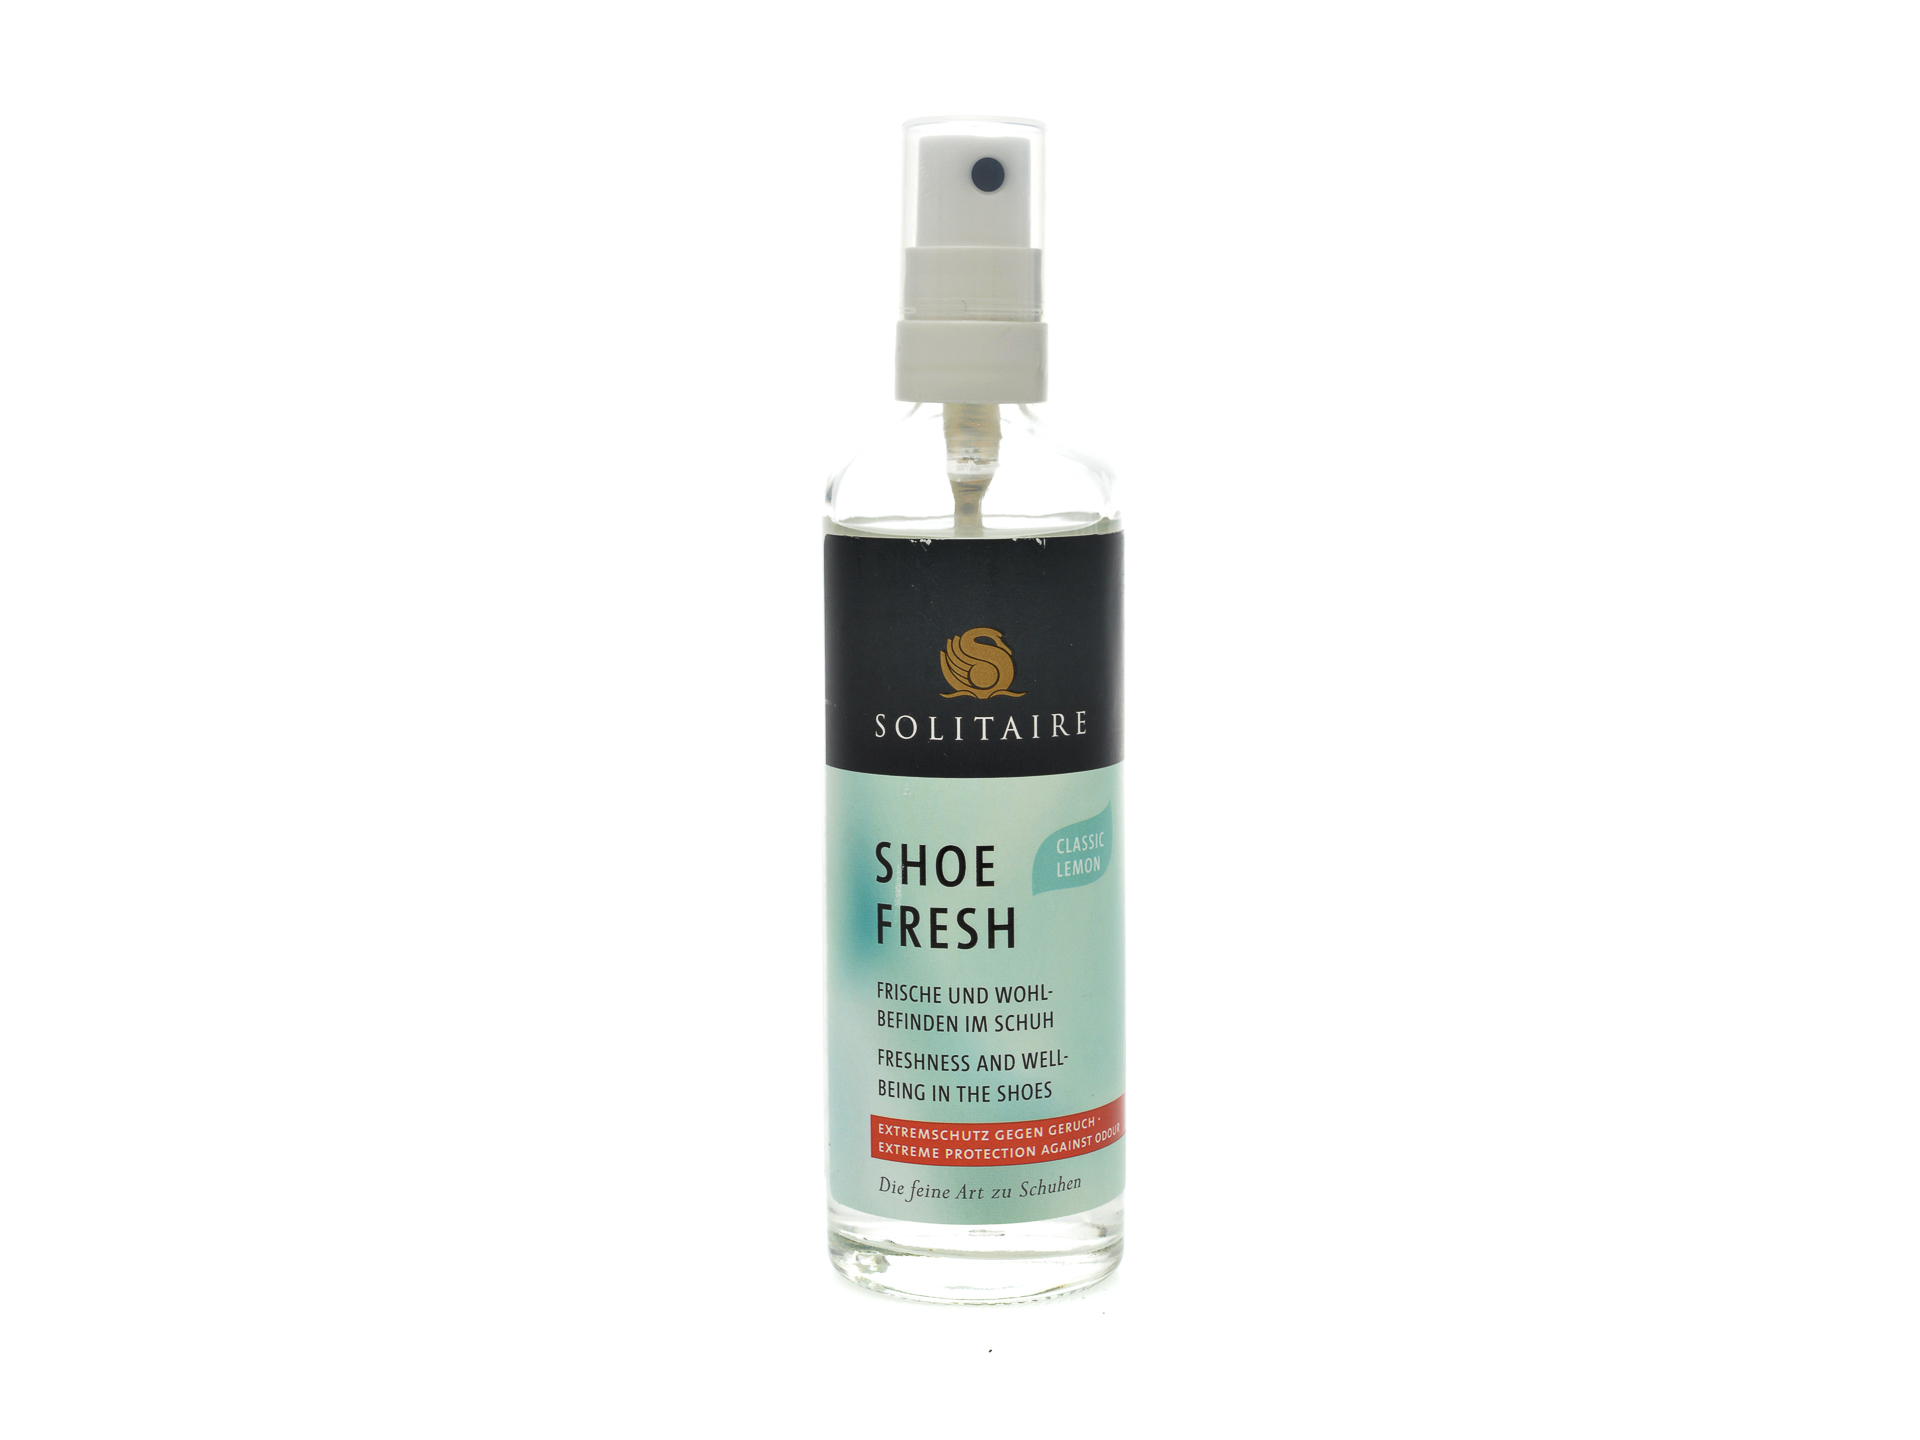 Spray pentru mentinerea mirosului placut in incaltaminte, Solitaire otter.ro poza reduceri 2021